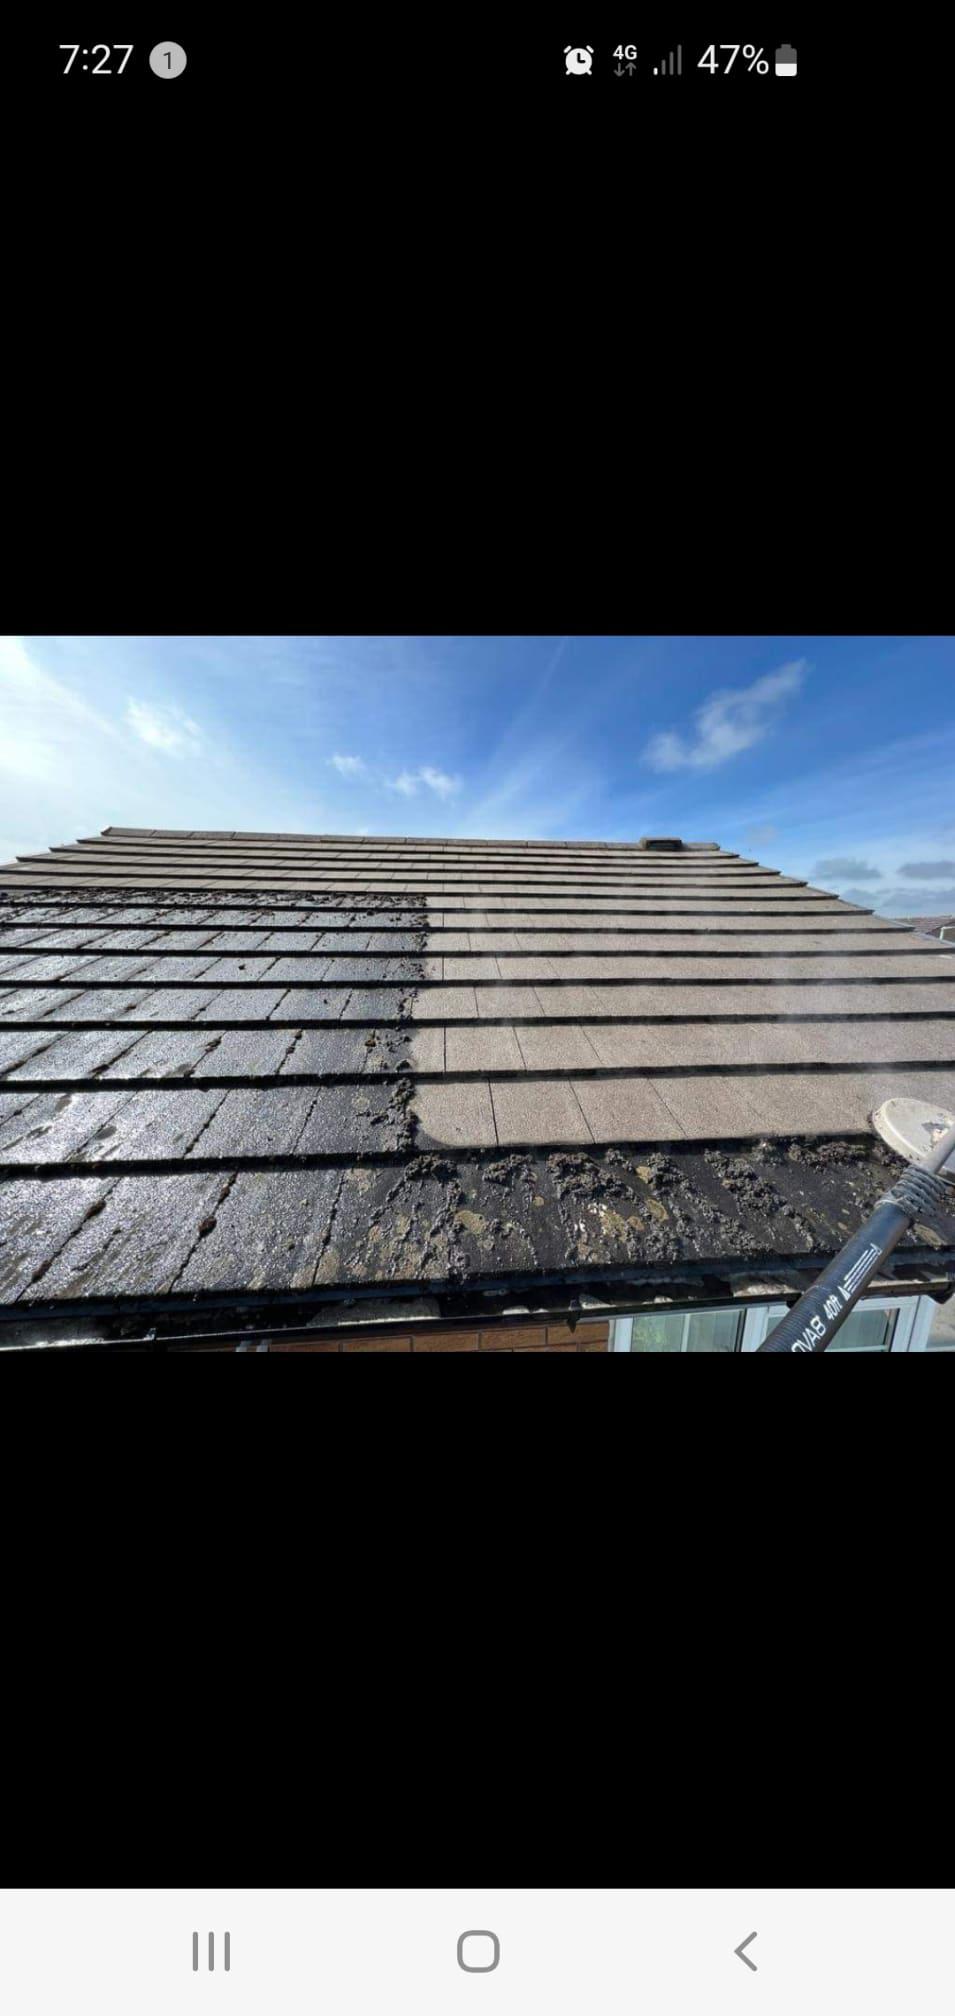 JD Roofing & Building Ltd Gateshead 01916 915272